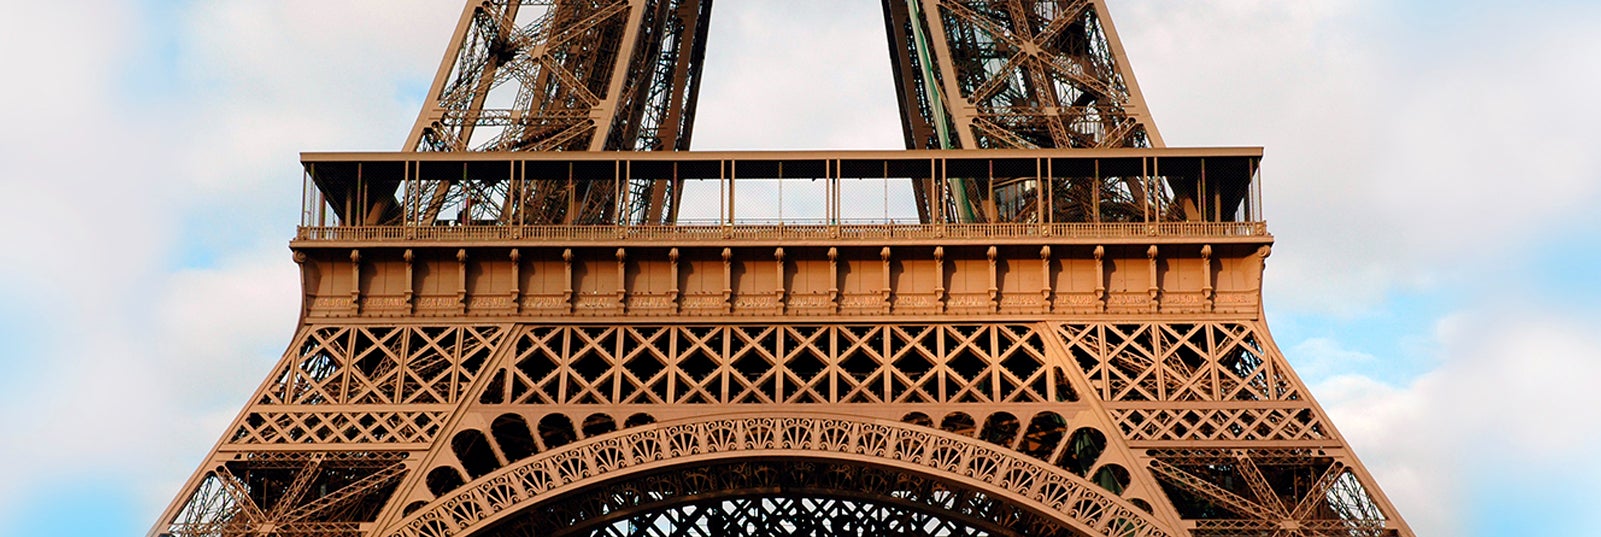 2 Days in Paris - Discover Paris in 48 hours